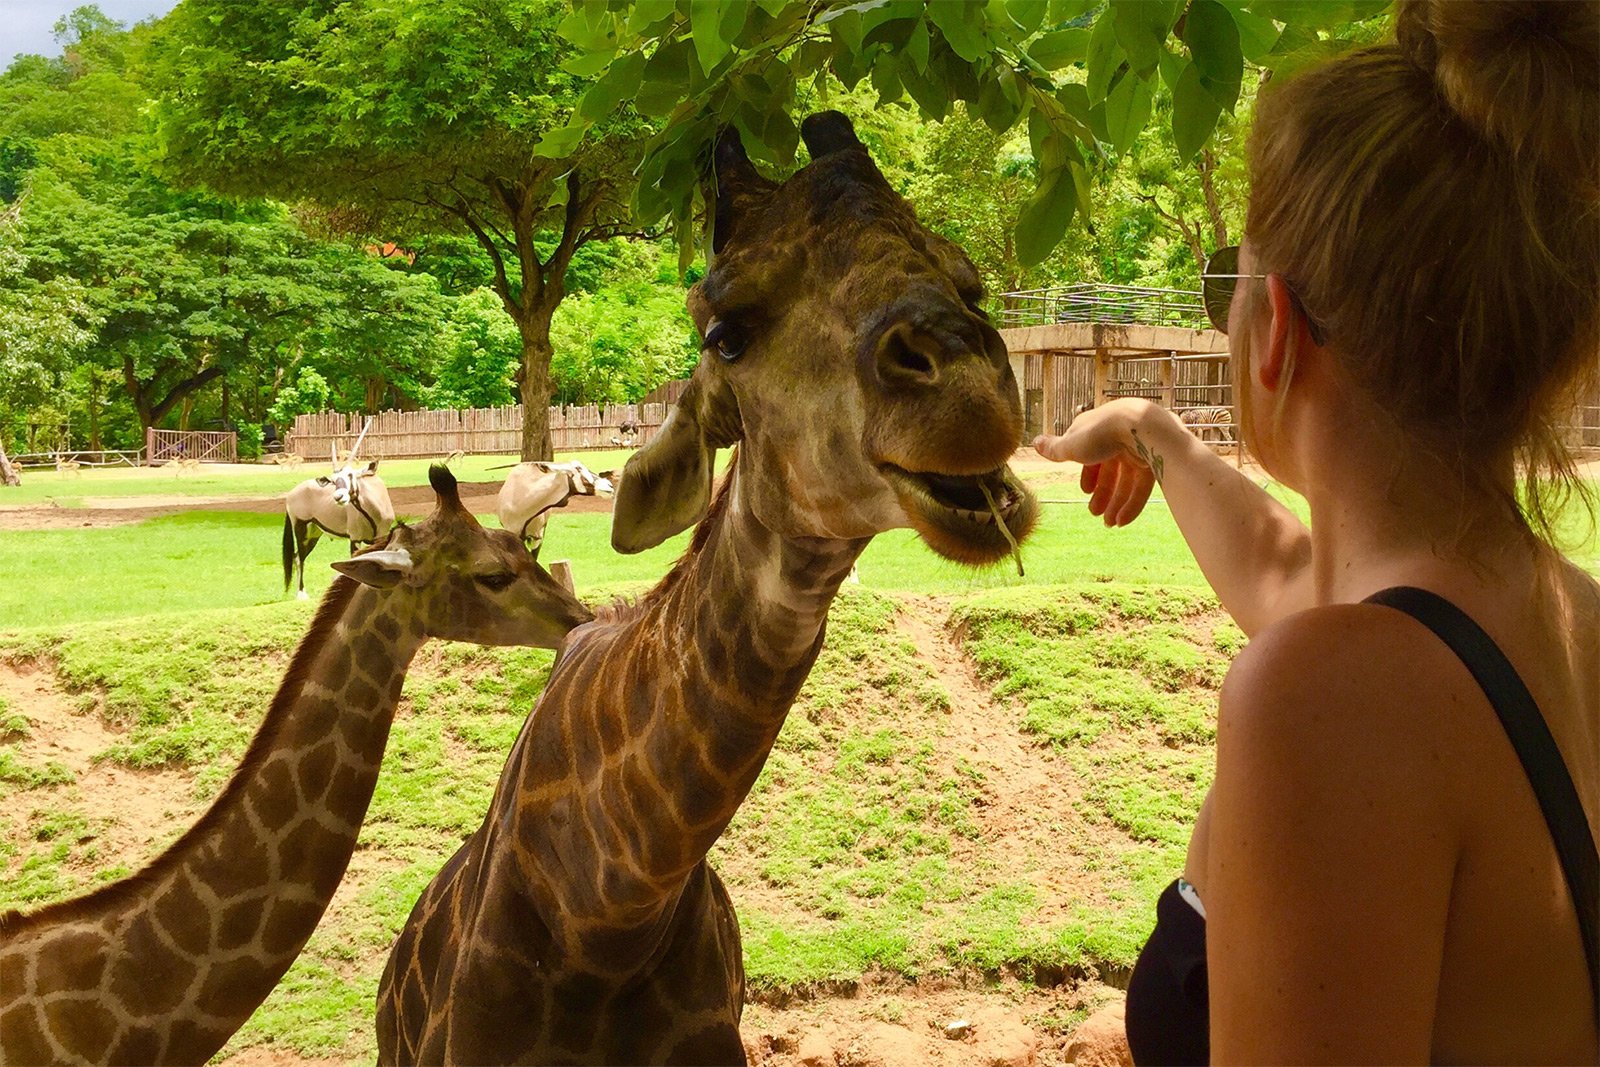 How to feed a Giraffe in Pattaya